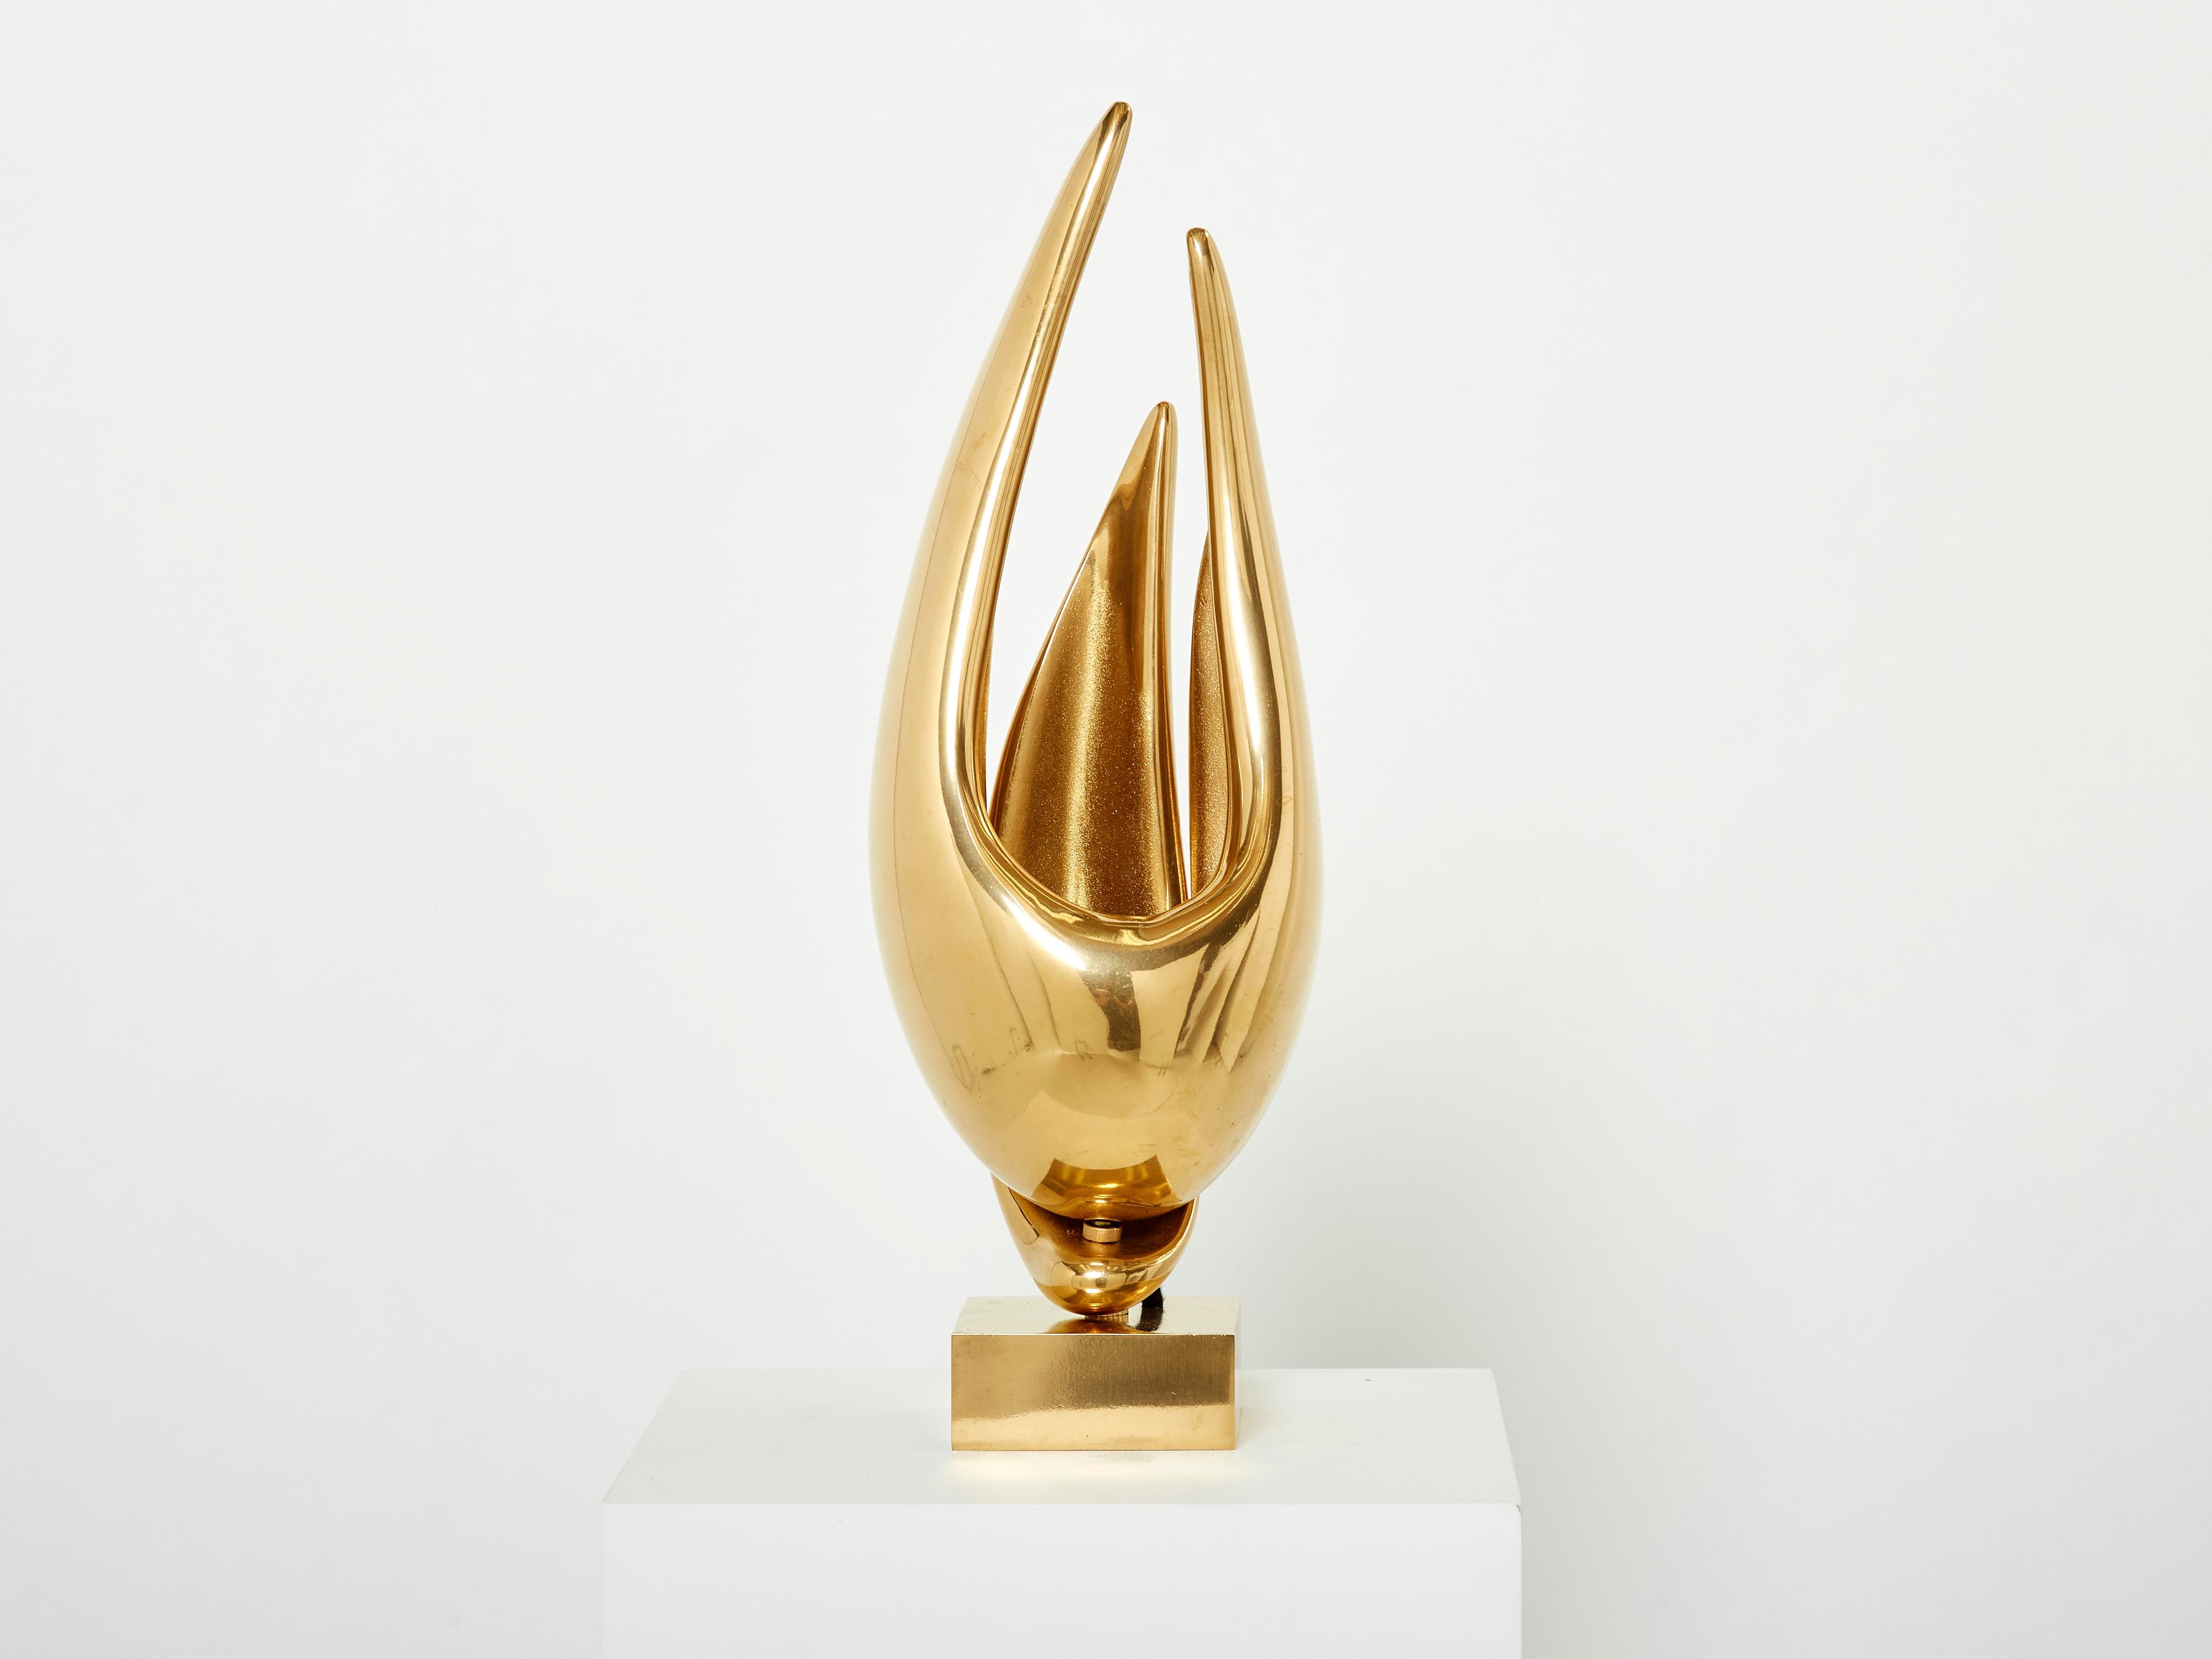 Michel Armand Gilt Bronze Modernist Sculpture Table Lamp, 1970 For Sale 4